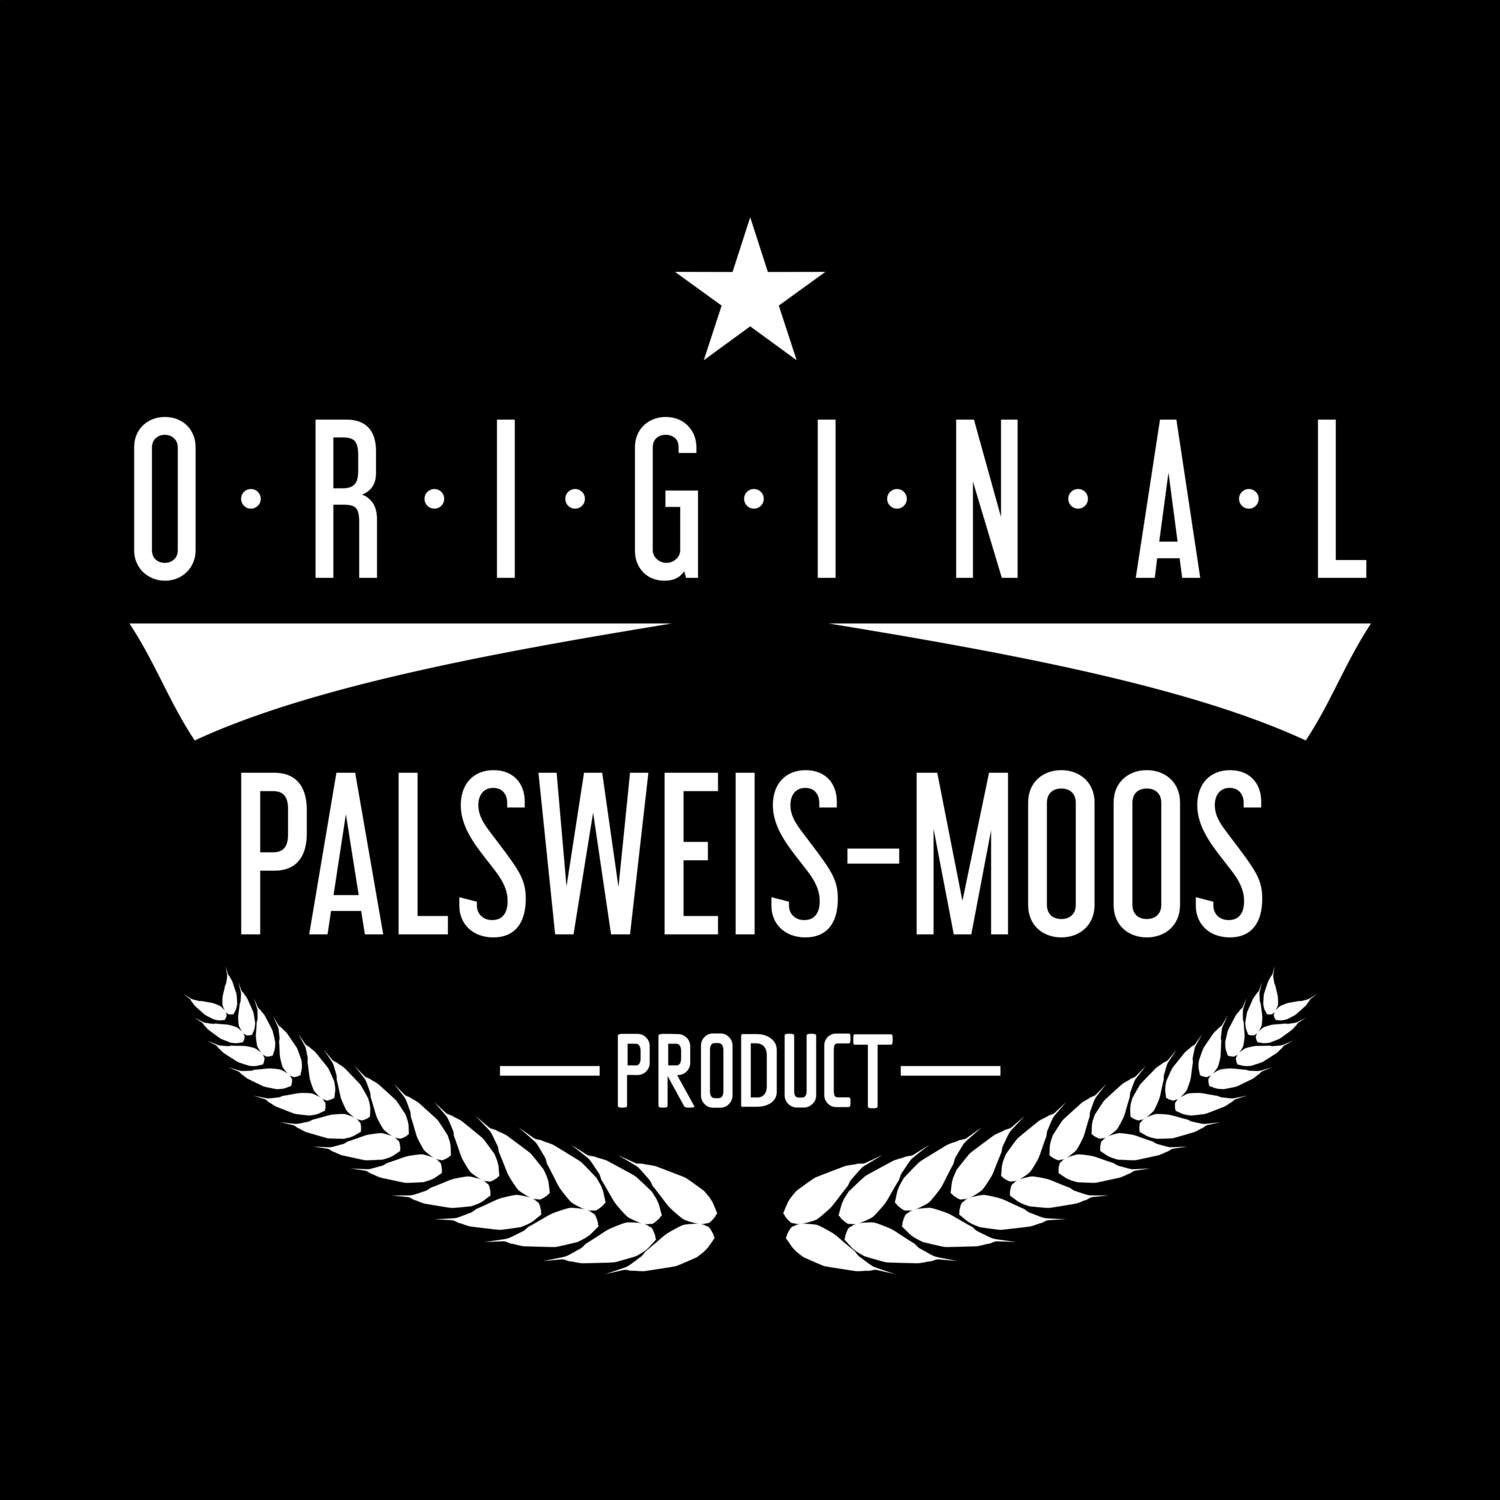 Palsweis-Moos T-Shirt »Original Product«